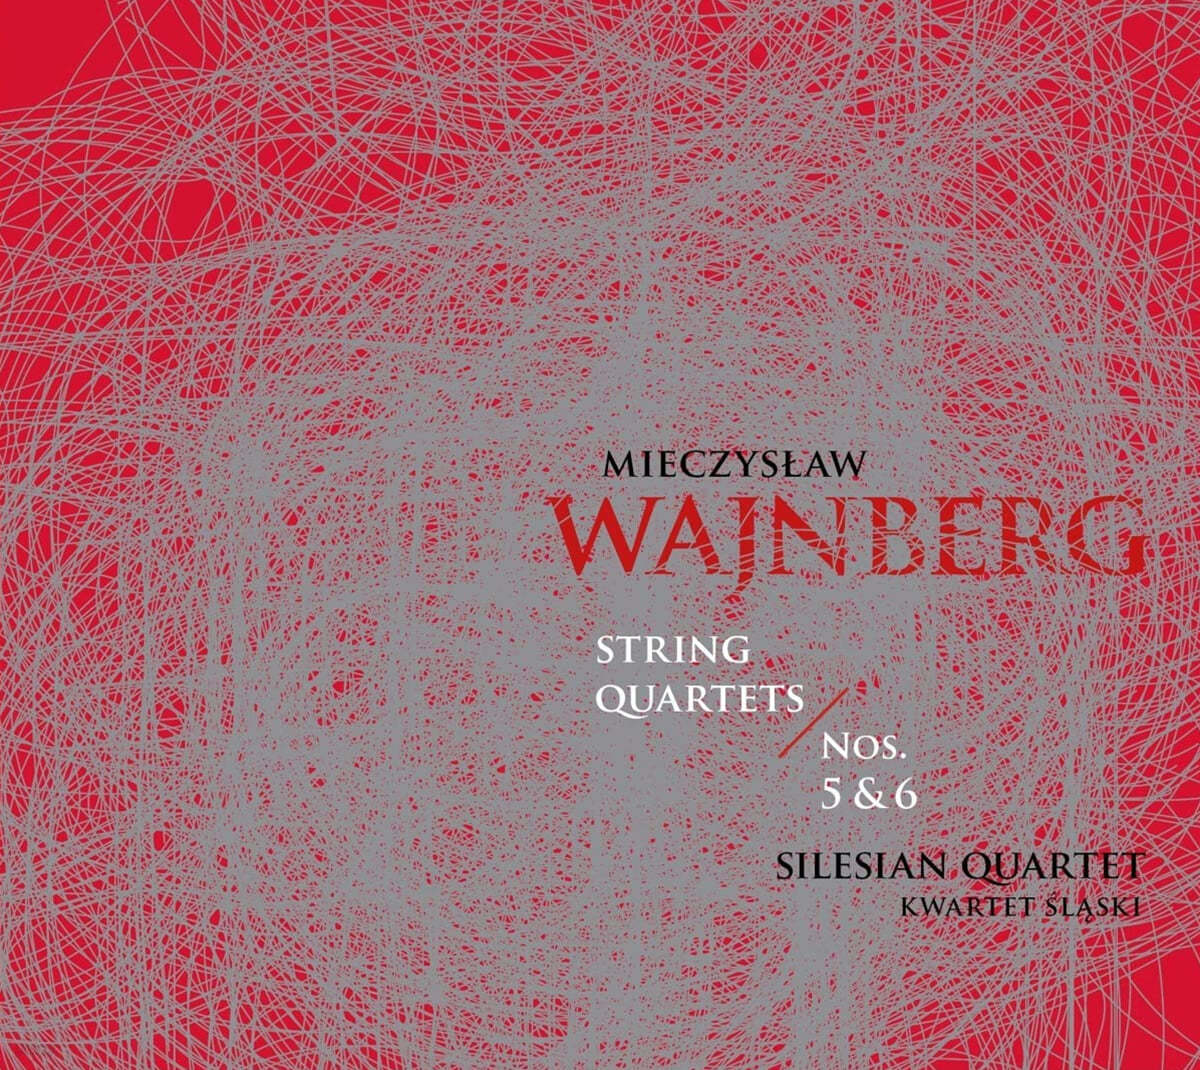 Silesian Quartet 바인베르크: 현악사중주 5, 6번, 즉흥곡과 로망스 (Mieczyslaw Wajnberg: String Quartets Nos. 5 & 6)